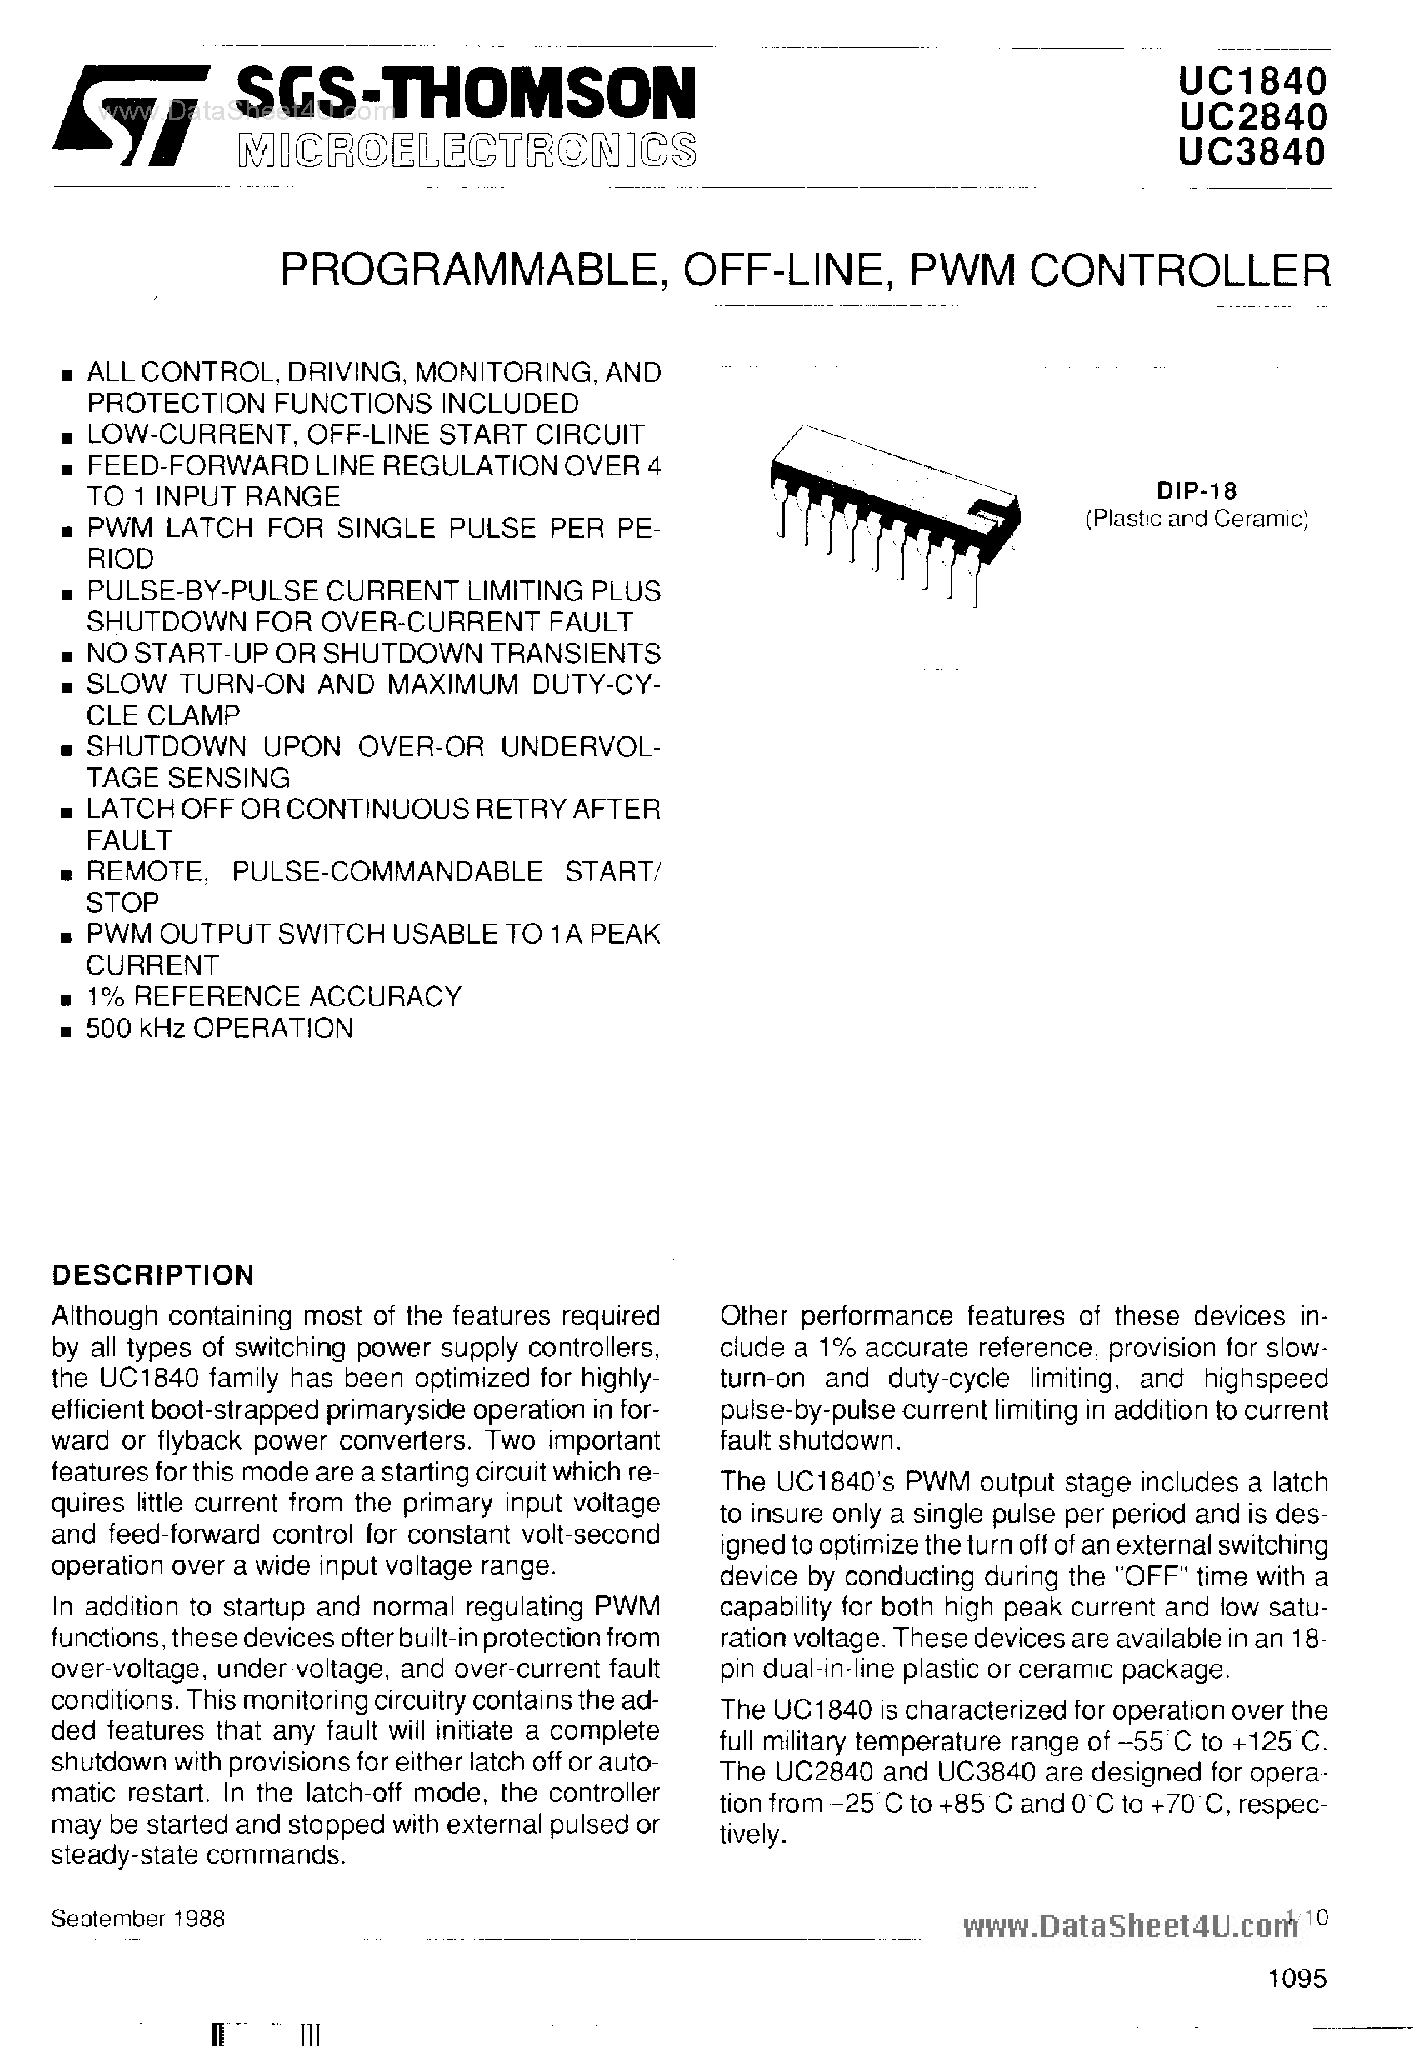 Datasheet UC1840 - PWM CONTROLLER page 1